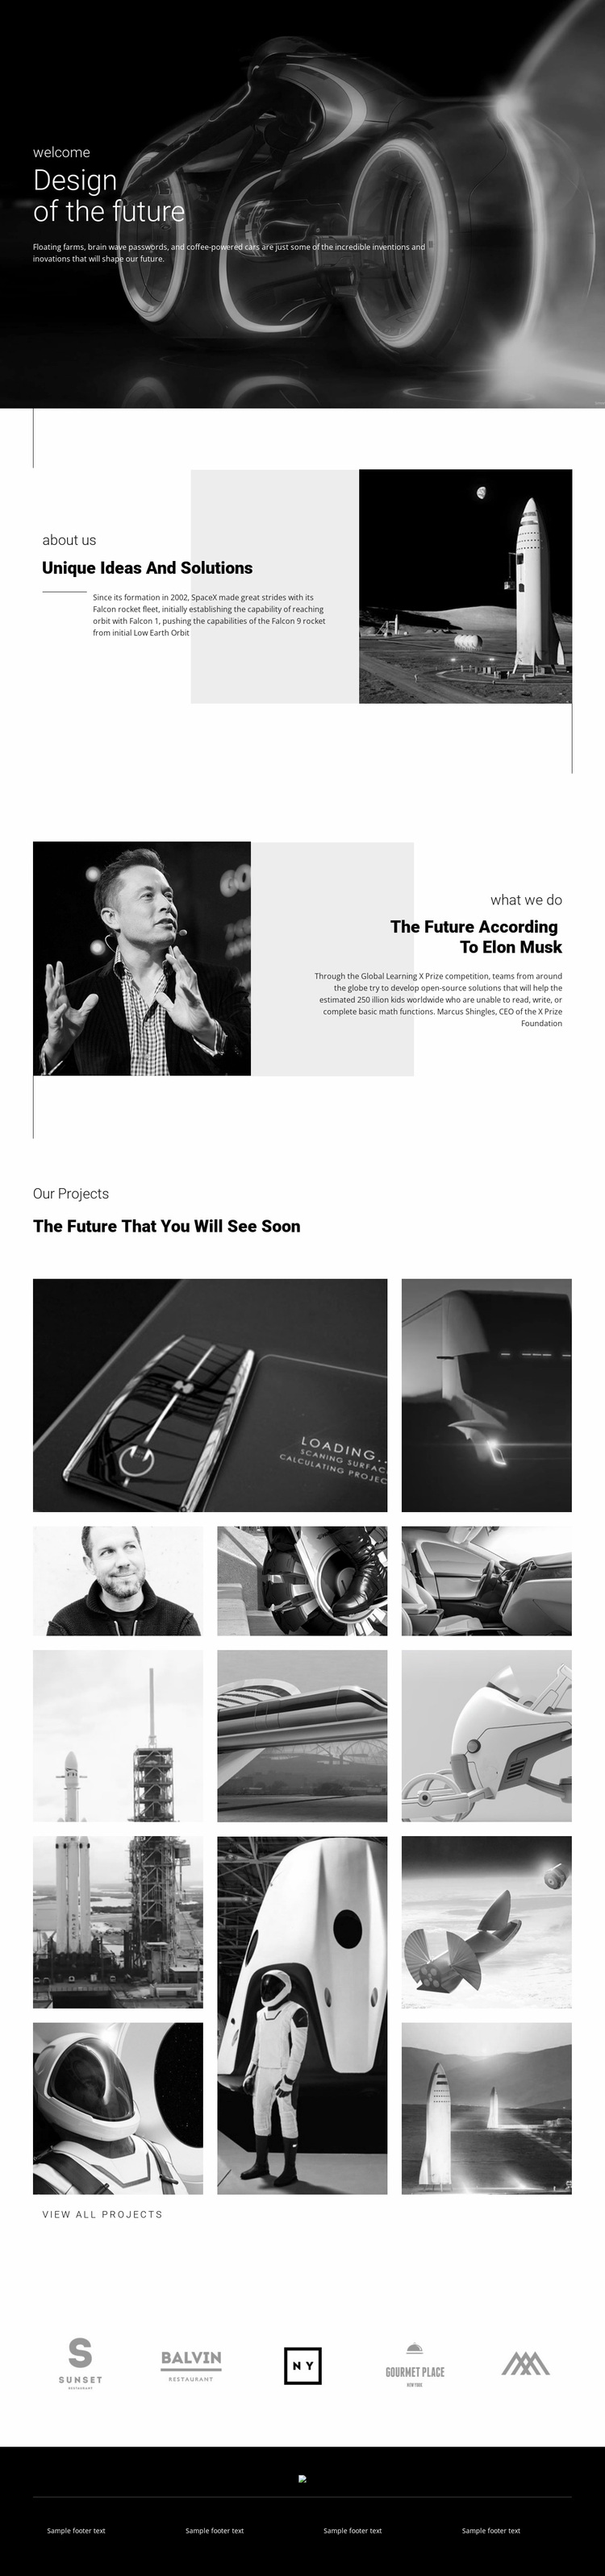 Design of future technology Website Design